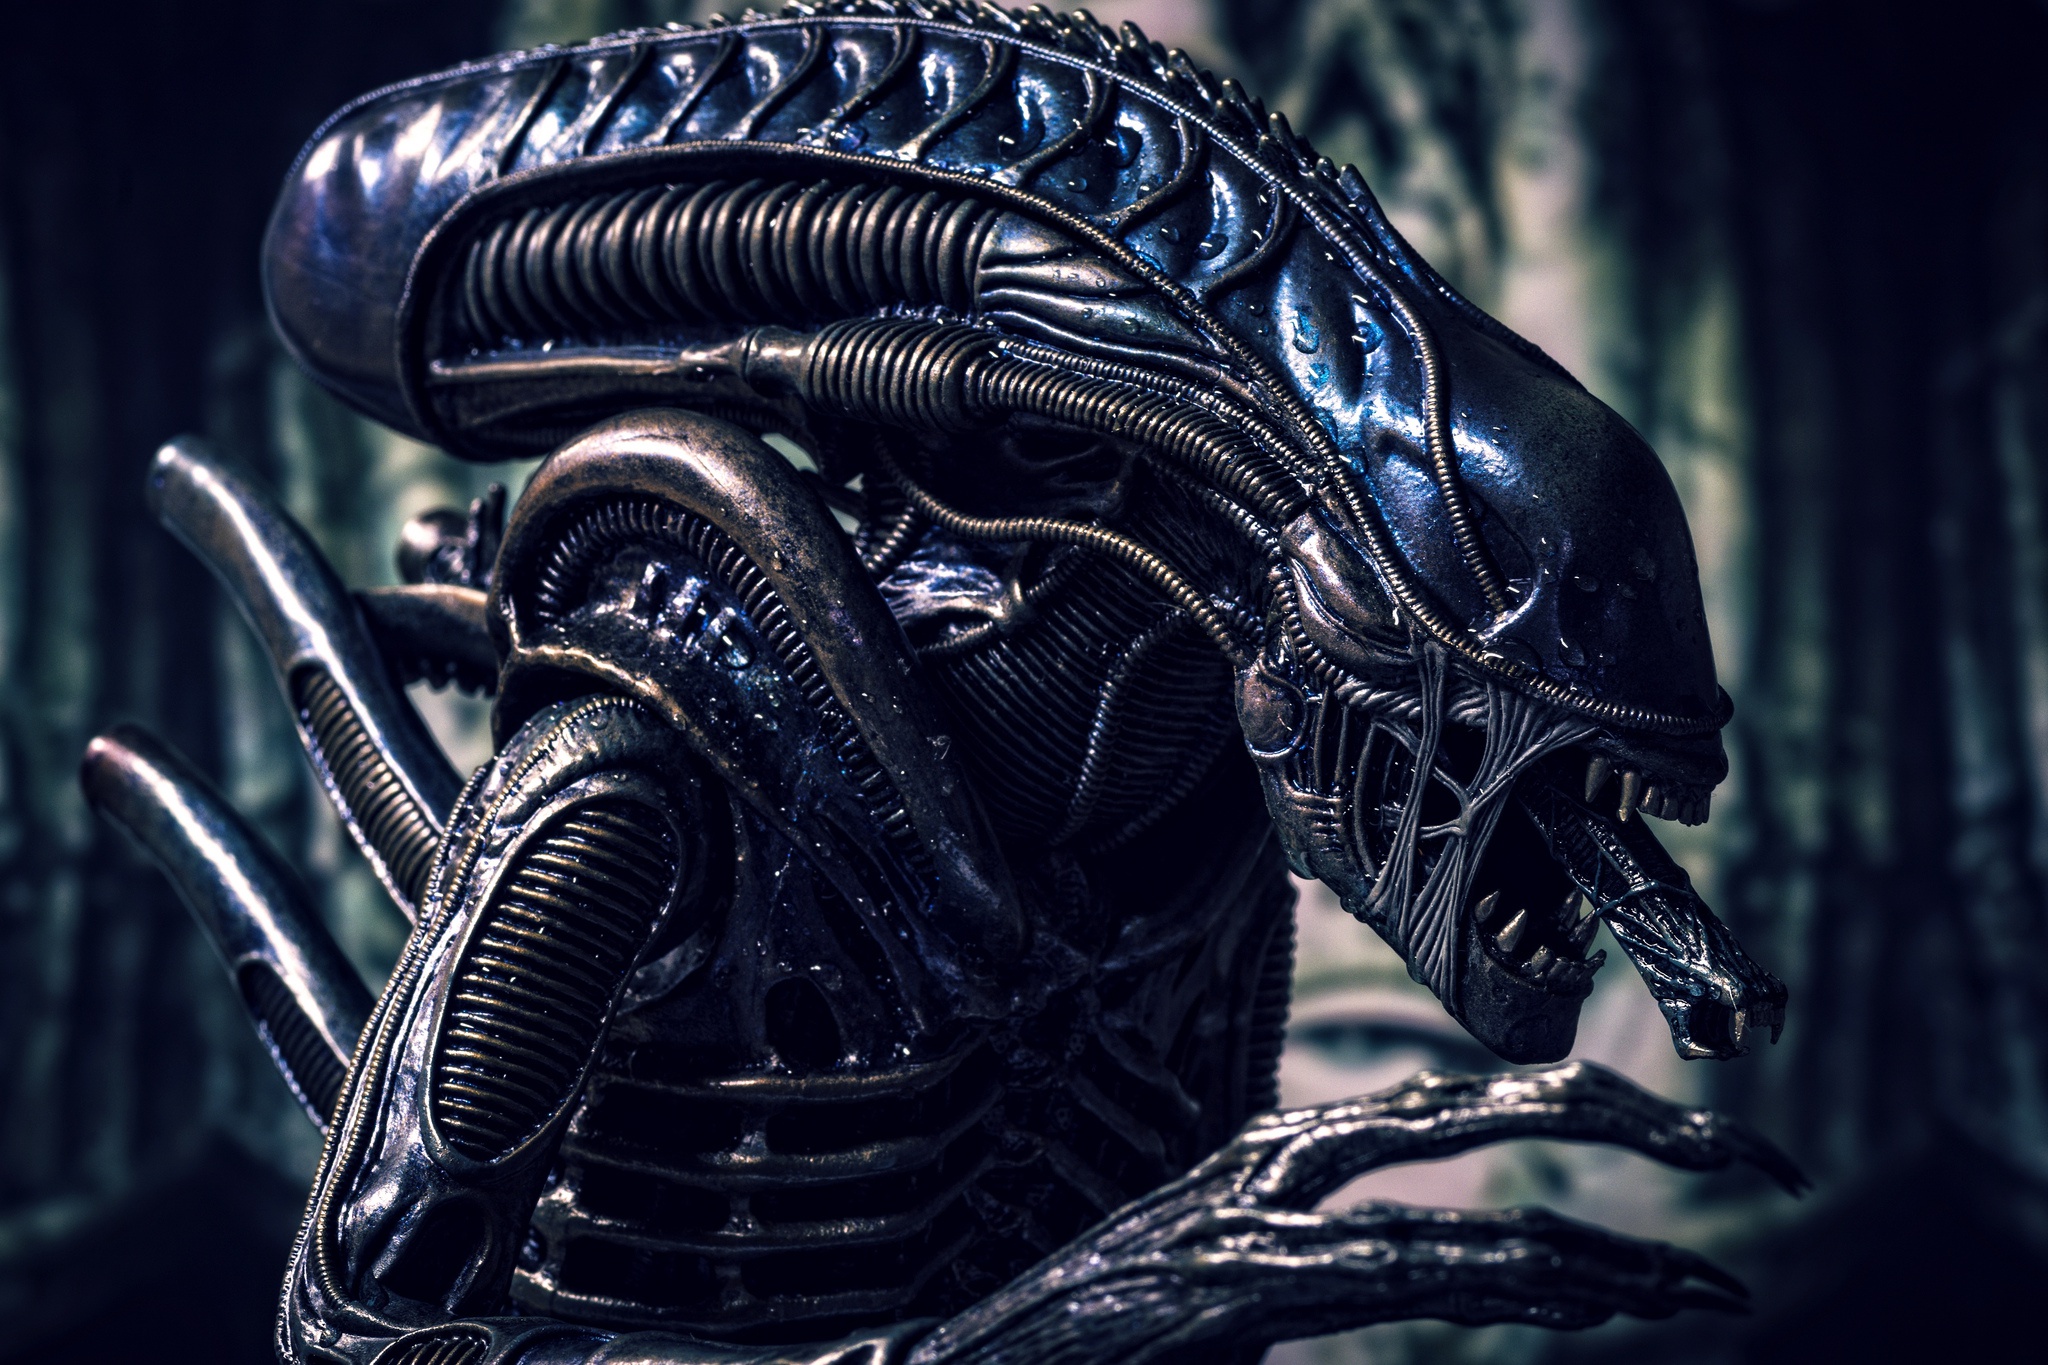 General 2048x1365 Xenomorph aliens movies Alien (Creature) science fiction horror digital art